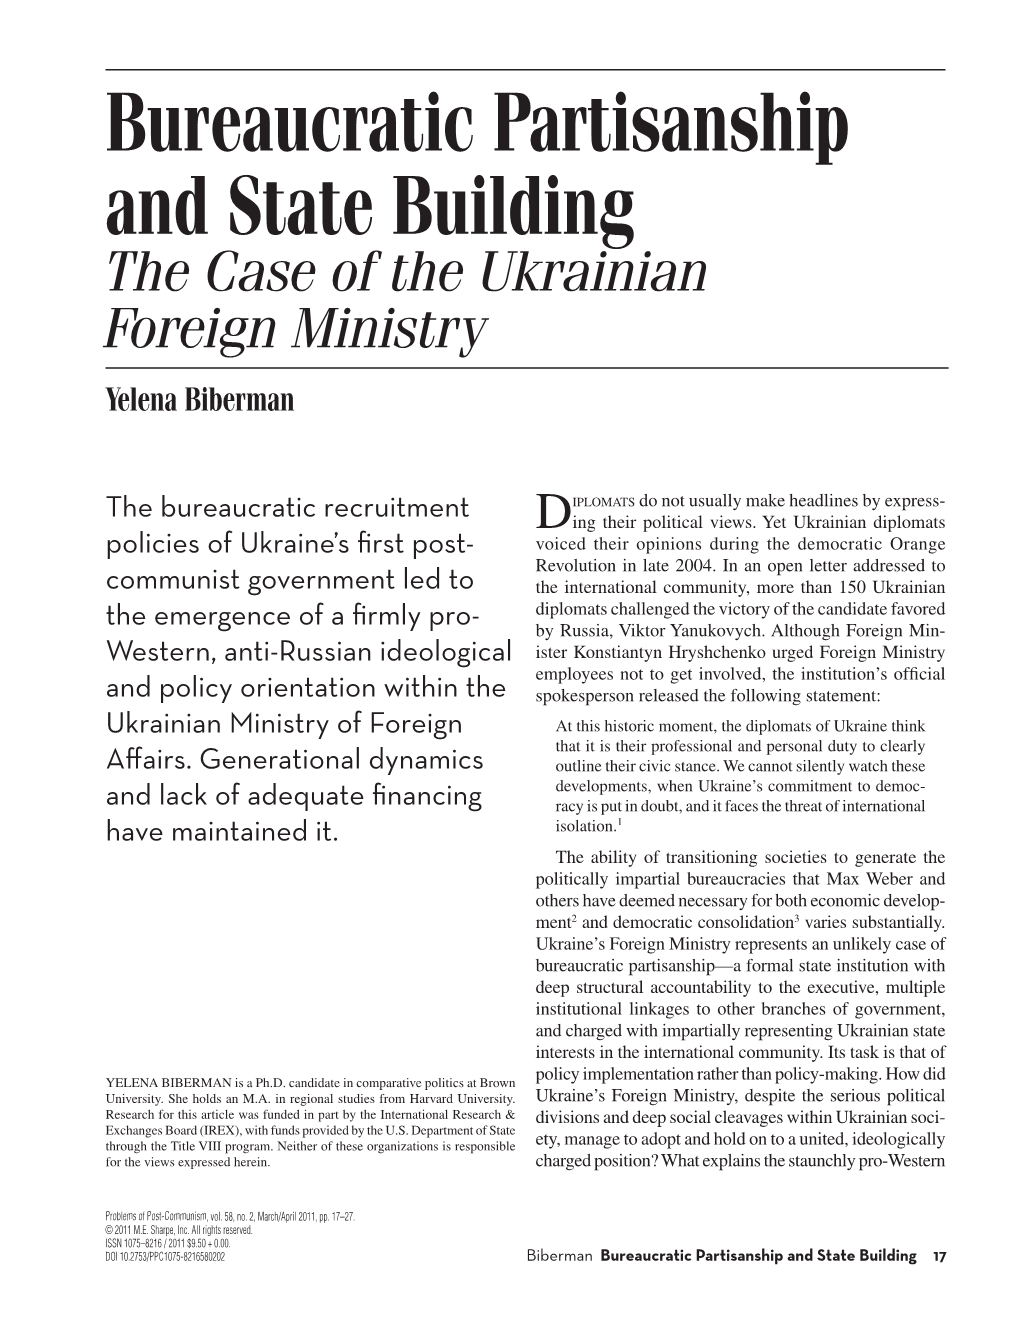 Bureaucratic Partisanship and State Building: the Case of Ukrainian